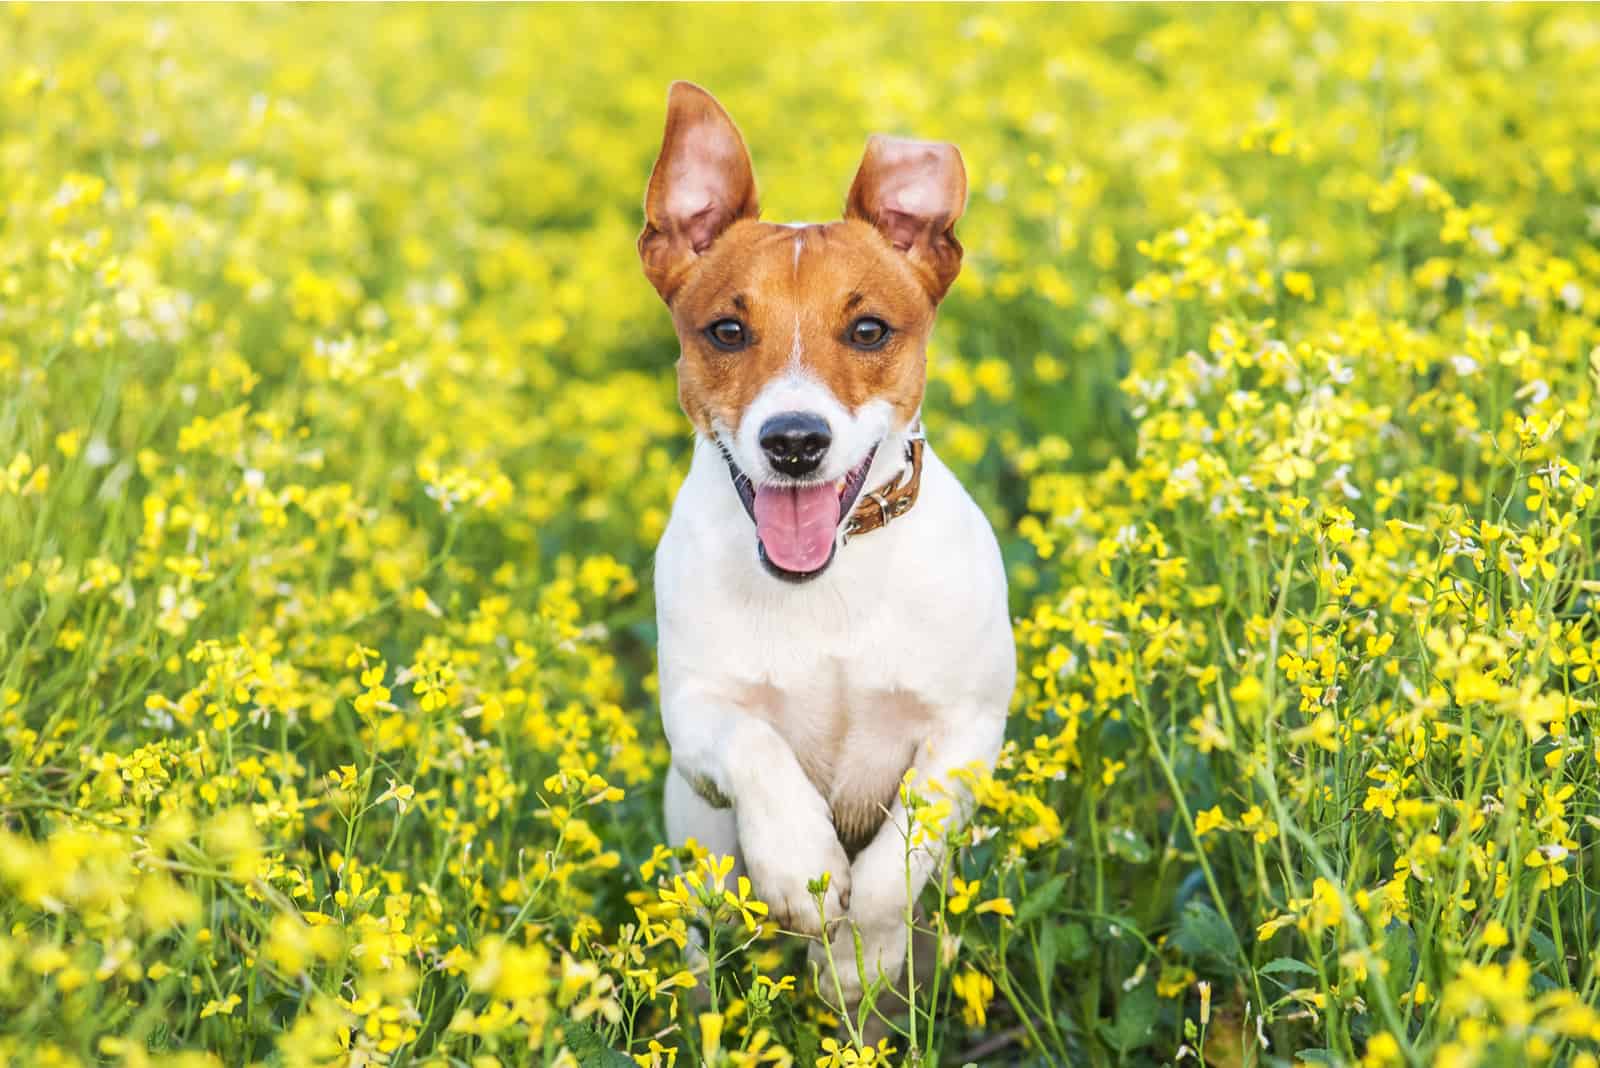 Jack Russell Terrier standing in flowers